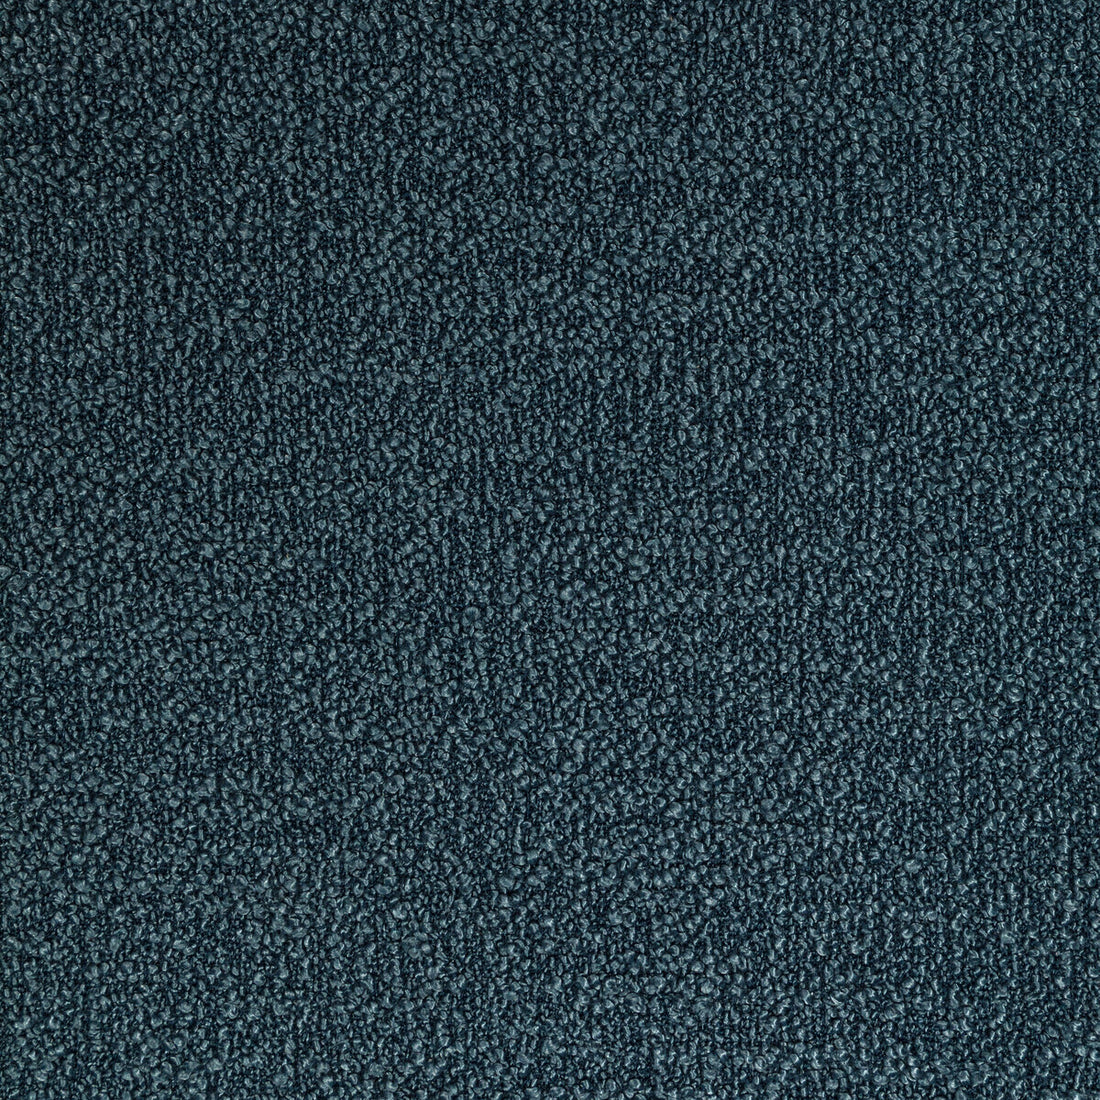 Kravet Smart fabric in 36857-505 color - pattern 36857.505.0 - by Kravet Smart in the Performance Kravetarmor collection